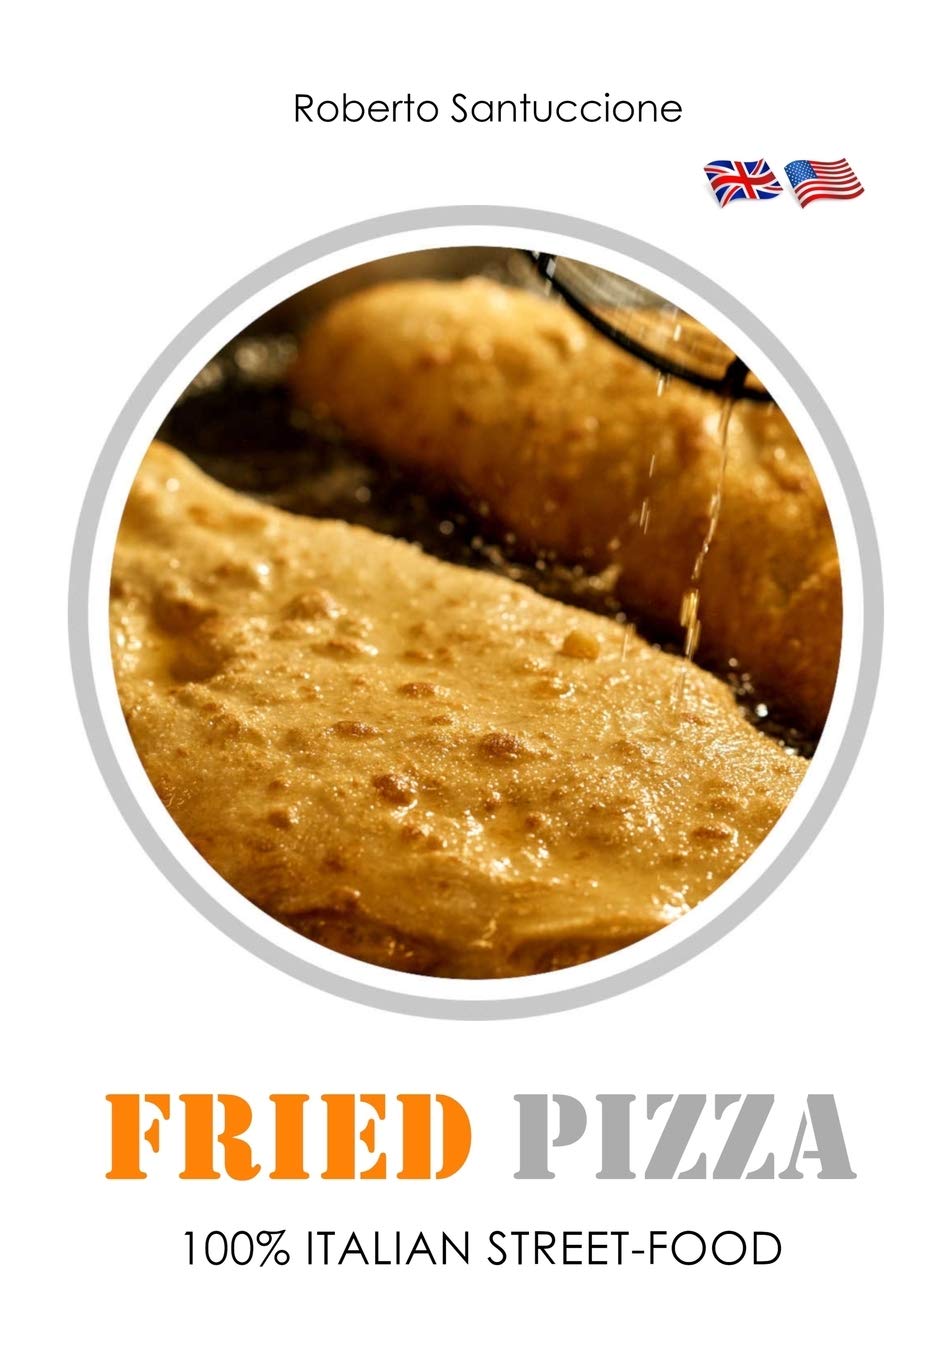 Fried Pizza: 100% Italian Street Food (Roberto Santuccione)